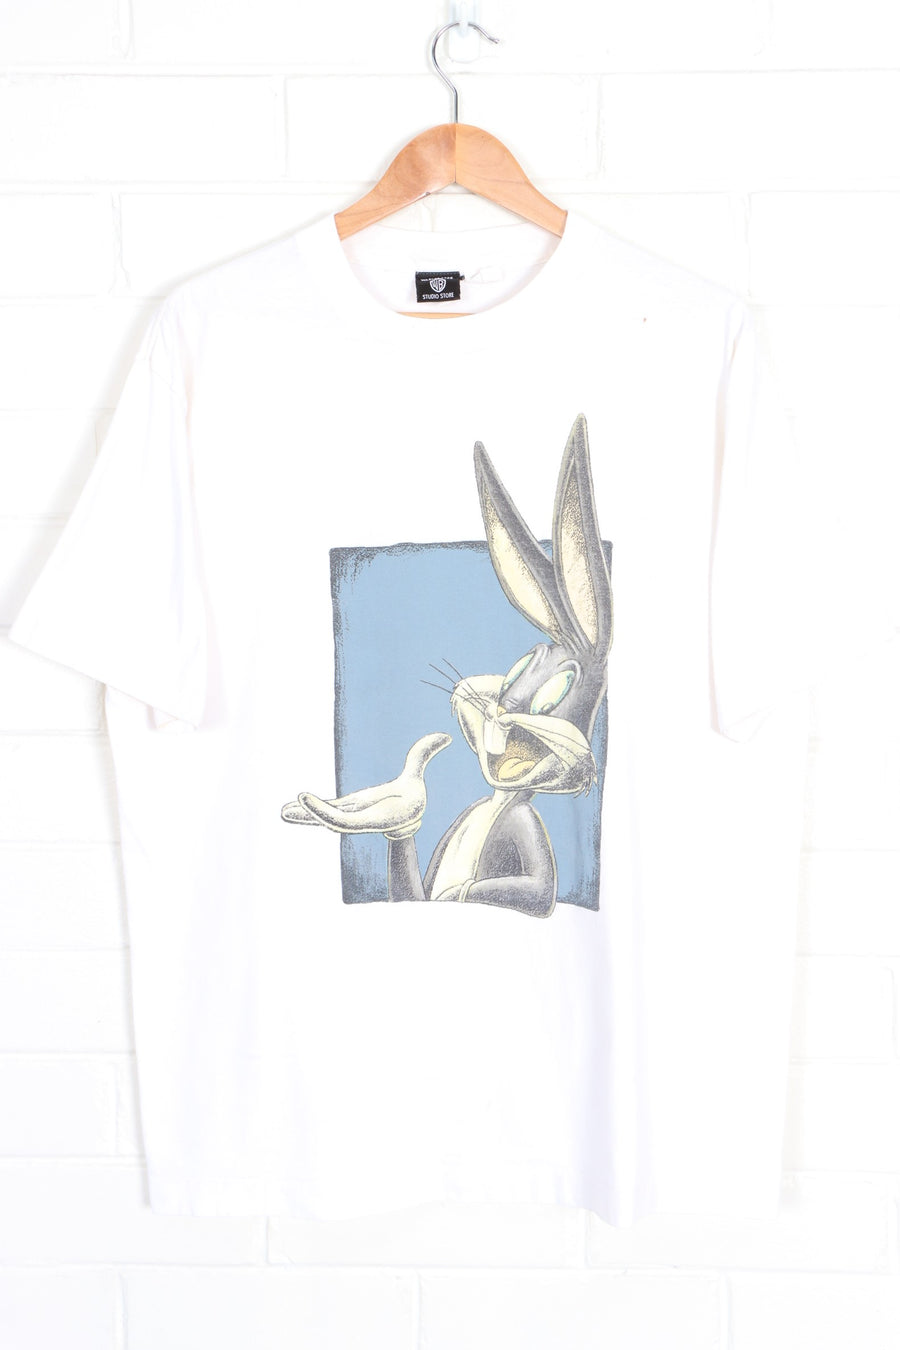 WARNER BROS Bugs Bunny 1995 Single Stitch T-Shirt USA Made (L)